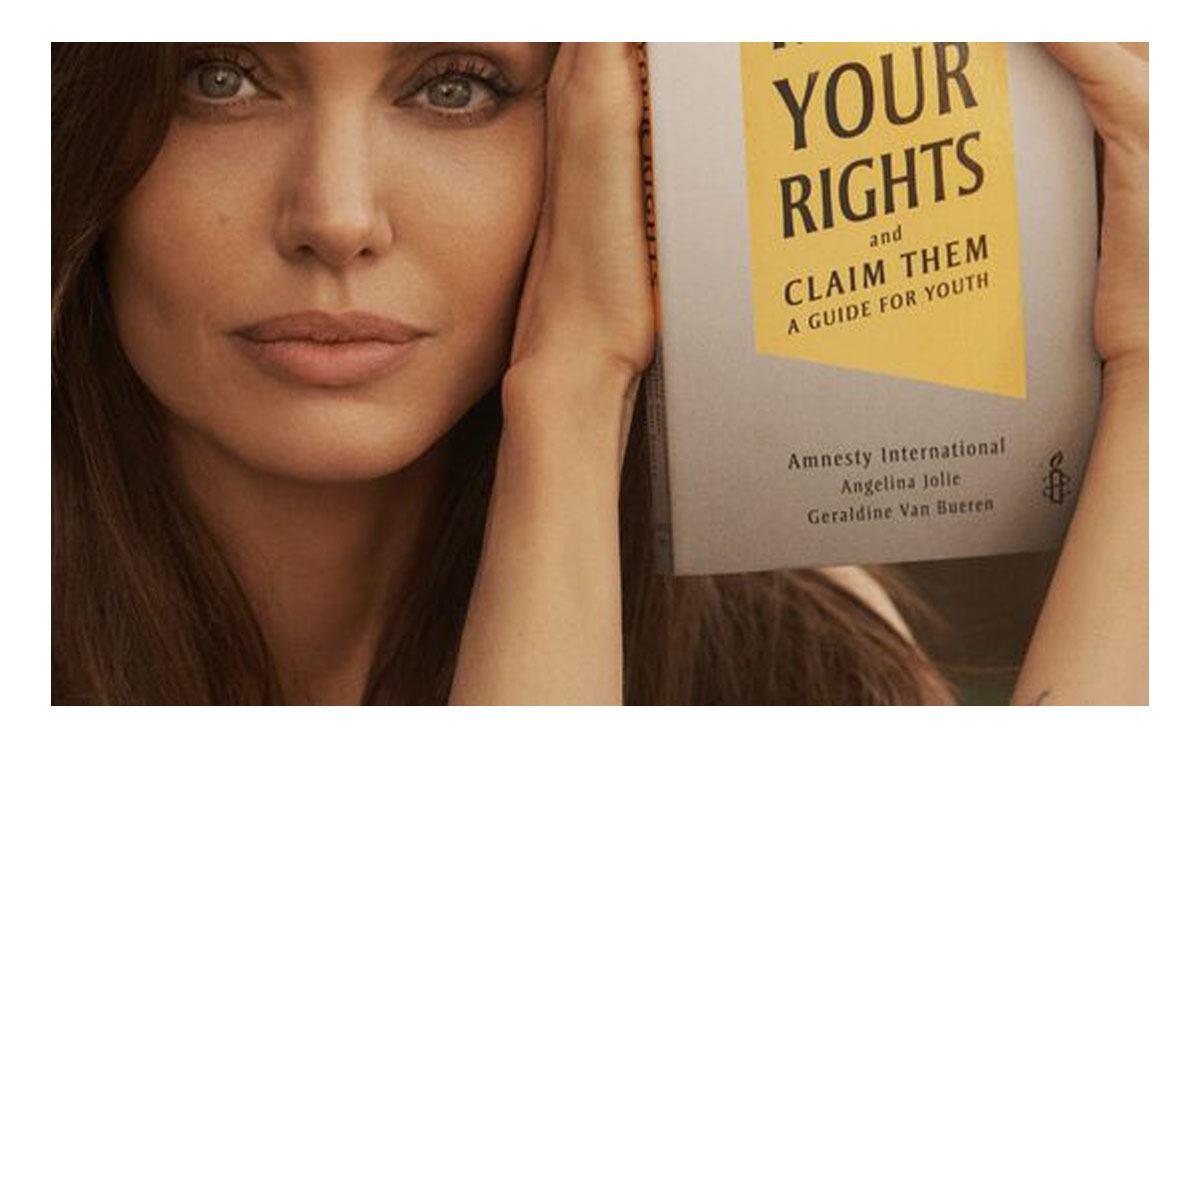 Angelina Jolie holding the Amnesty International book